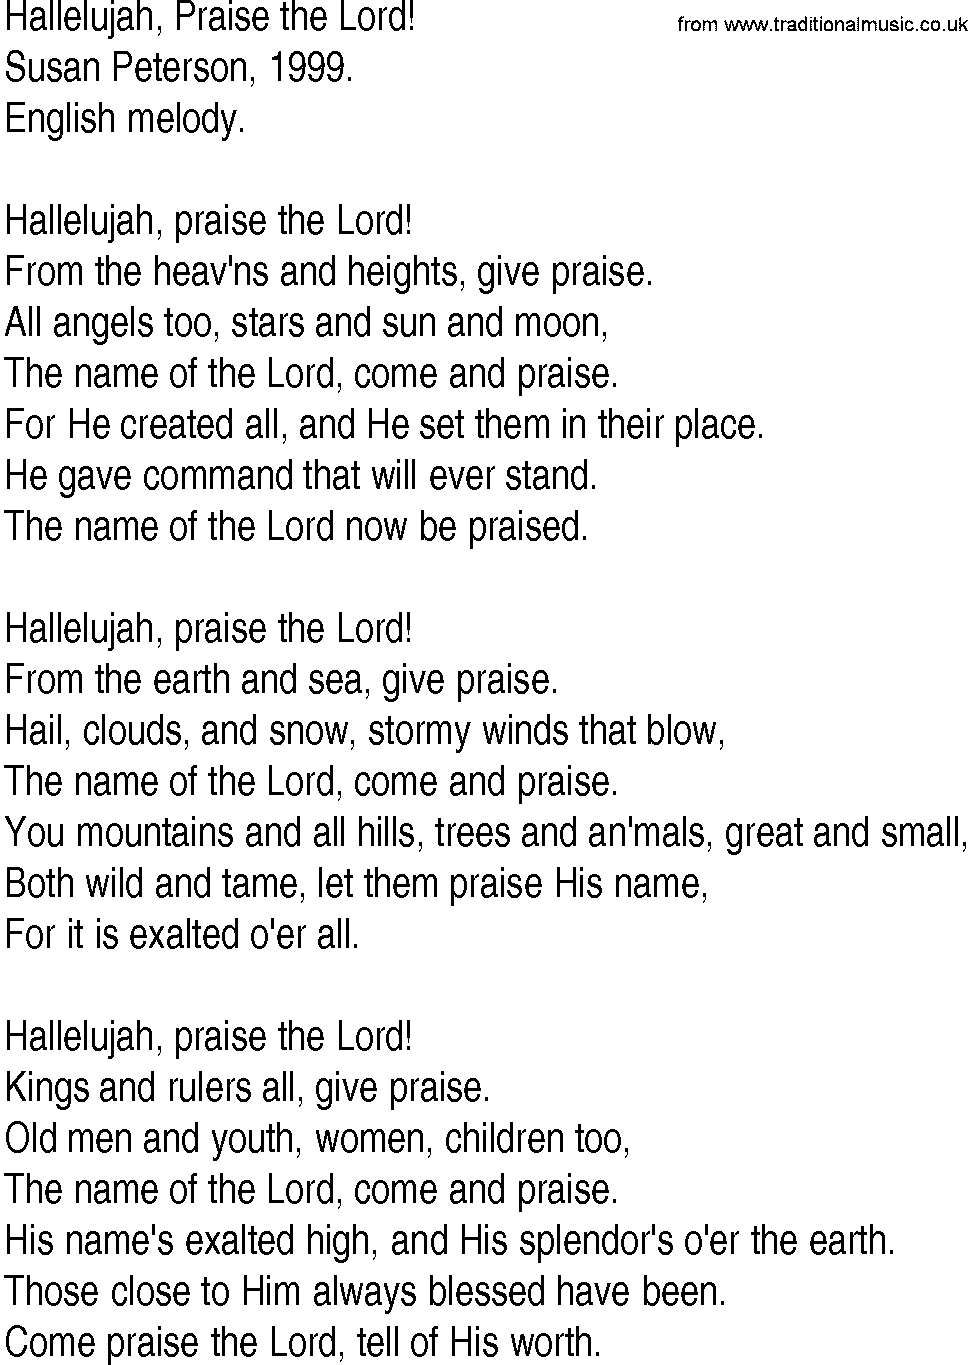 Hymn and Gospel Song: Hallelujah, Praise the Lord! by Susan Peterson lyrics